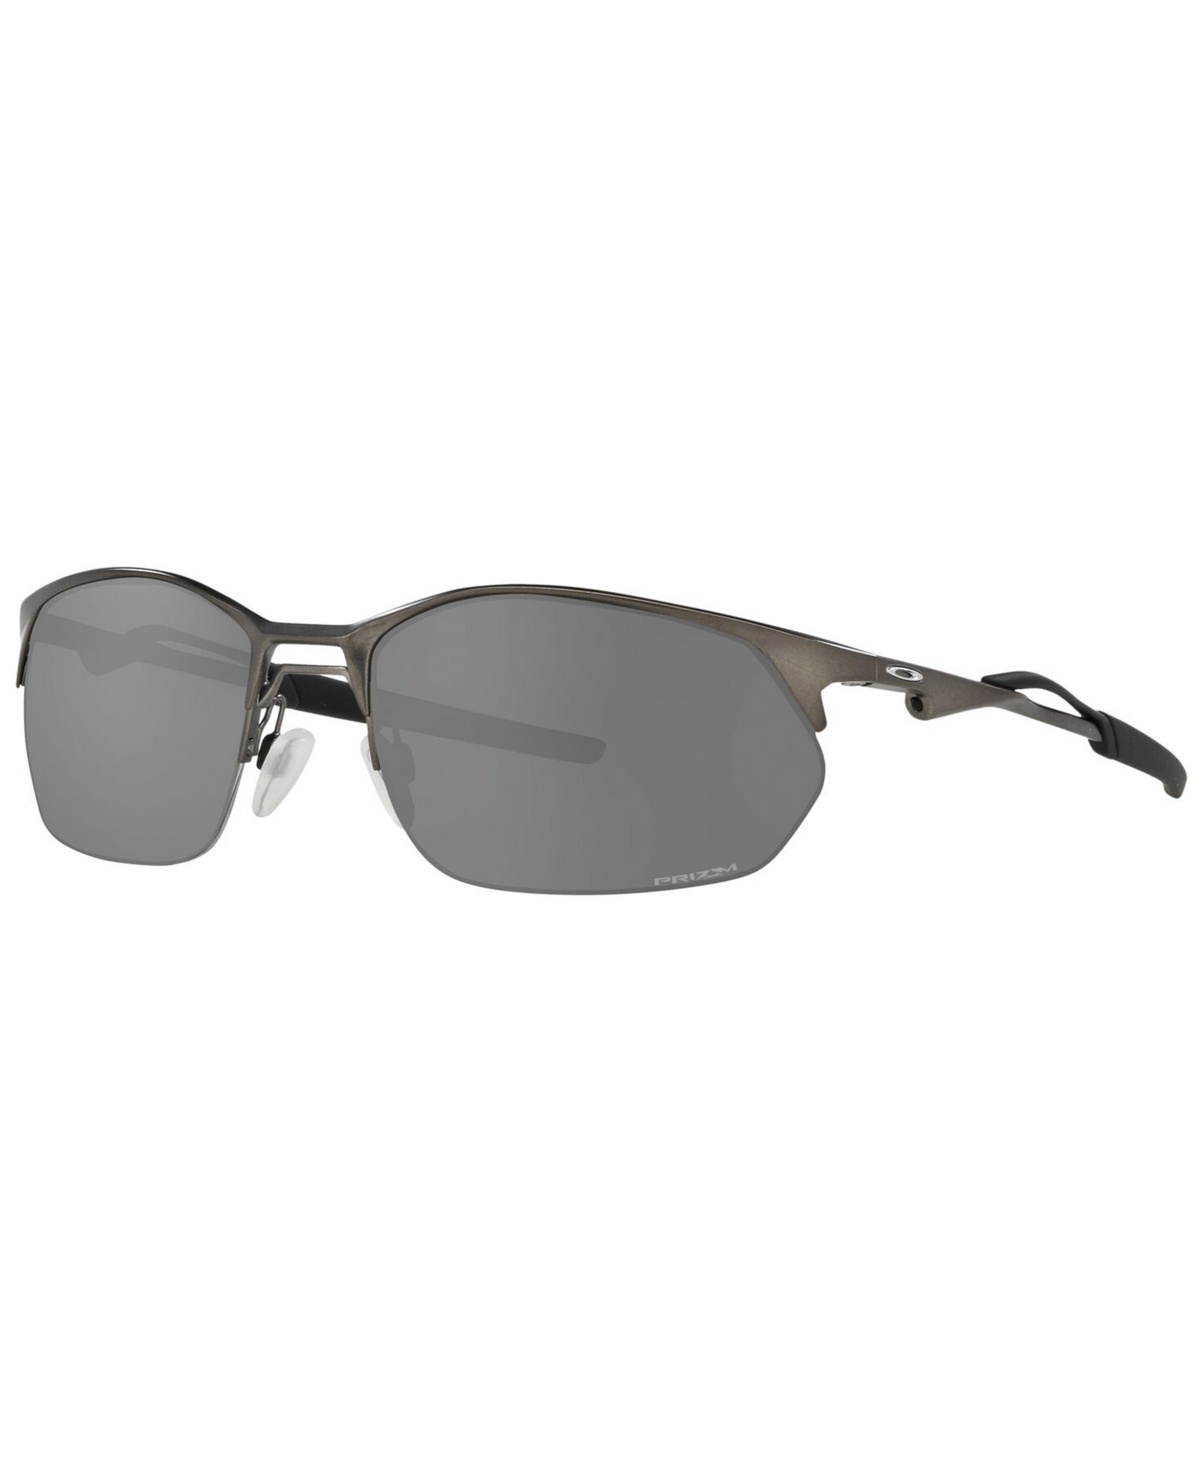 Men's Sunglasses, OO4145 60 - SATIN BLACK/PRIZM SAPPHIRE